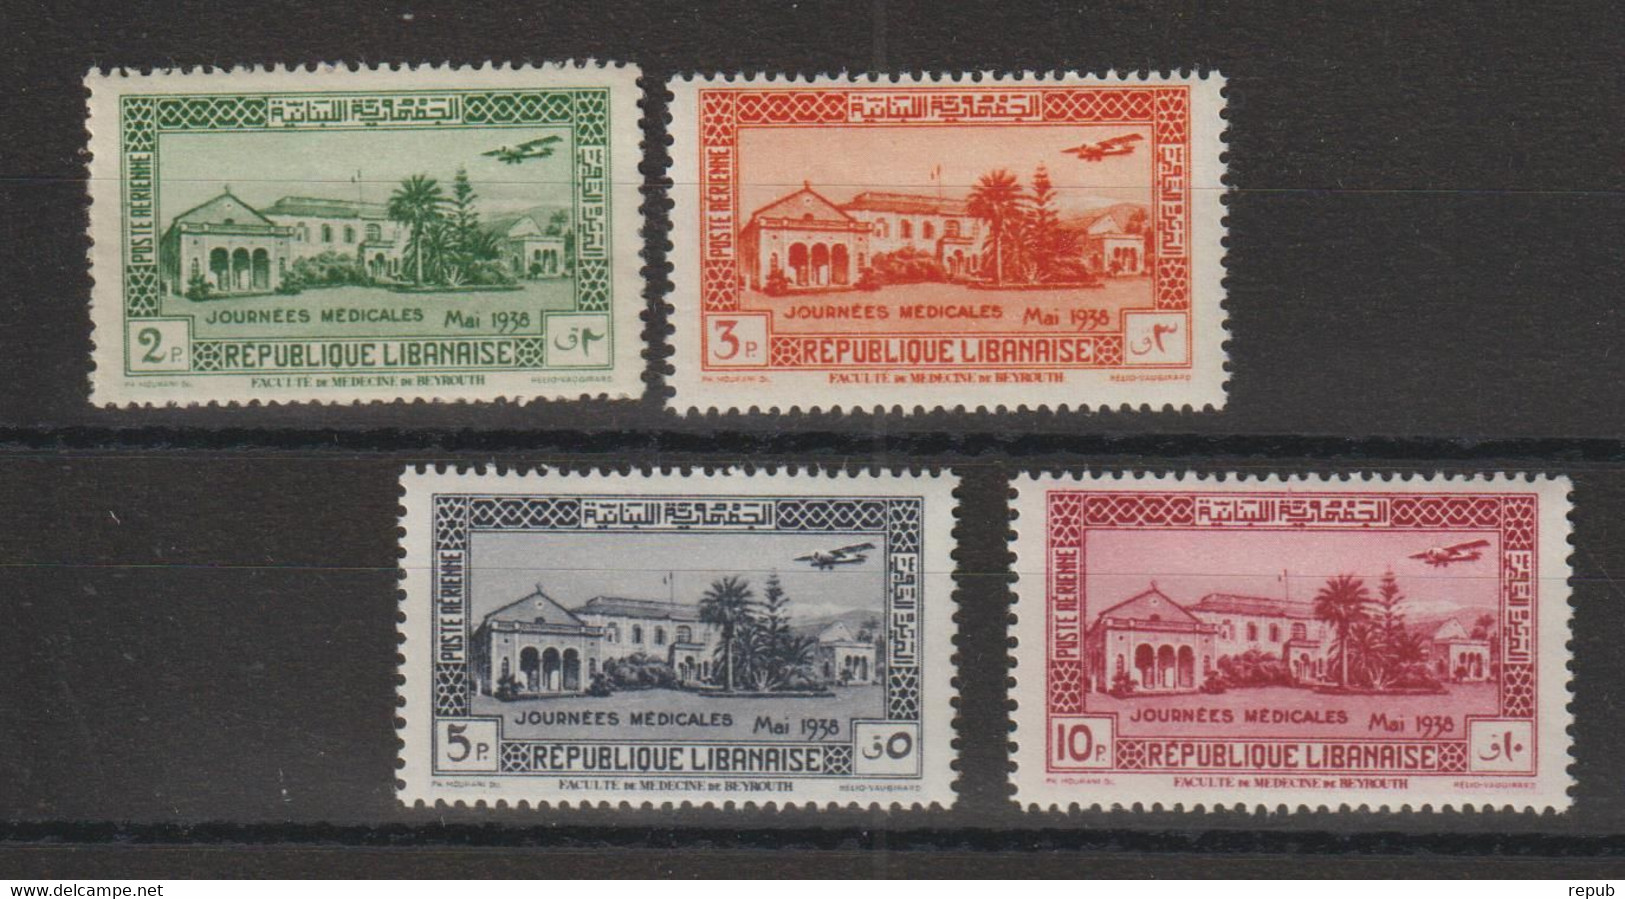 Grand Liban 1938 PA 75-78, 4 Val * Charnière MH - Poste Aérienne